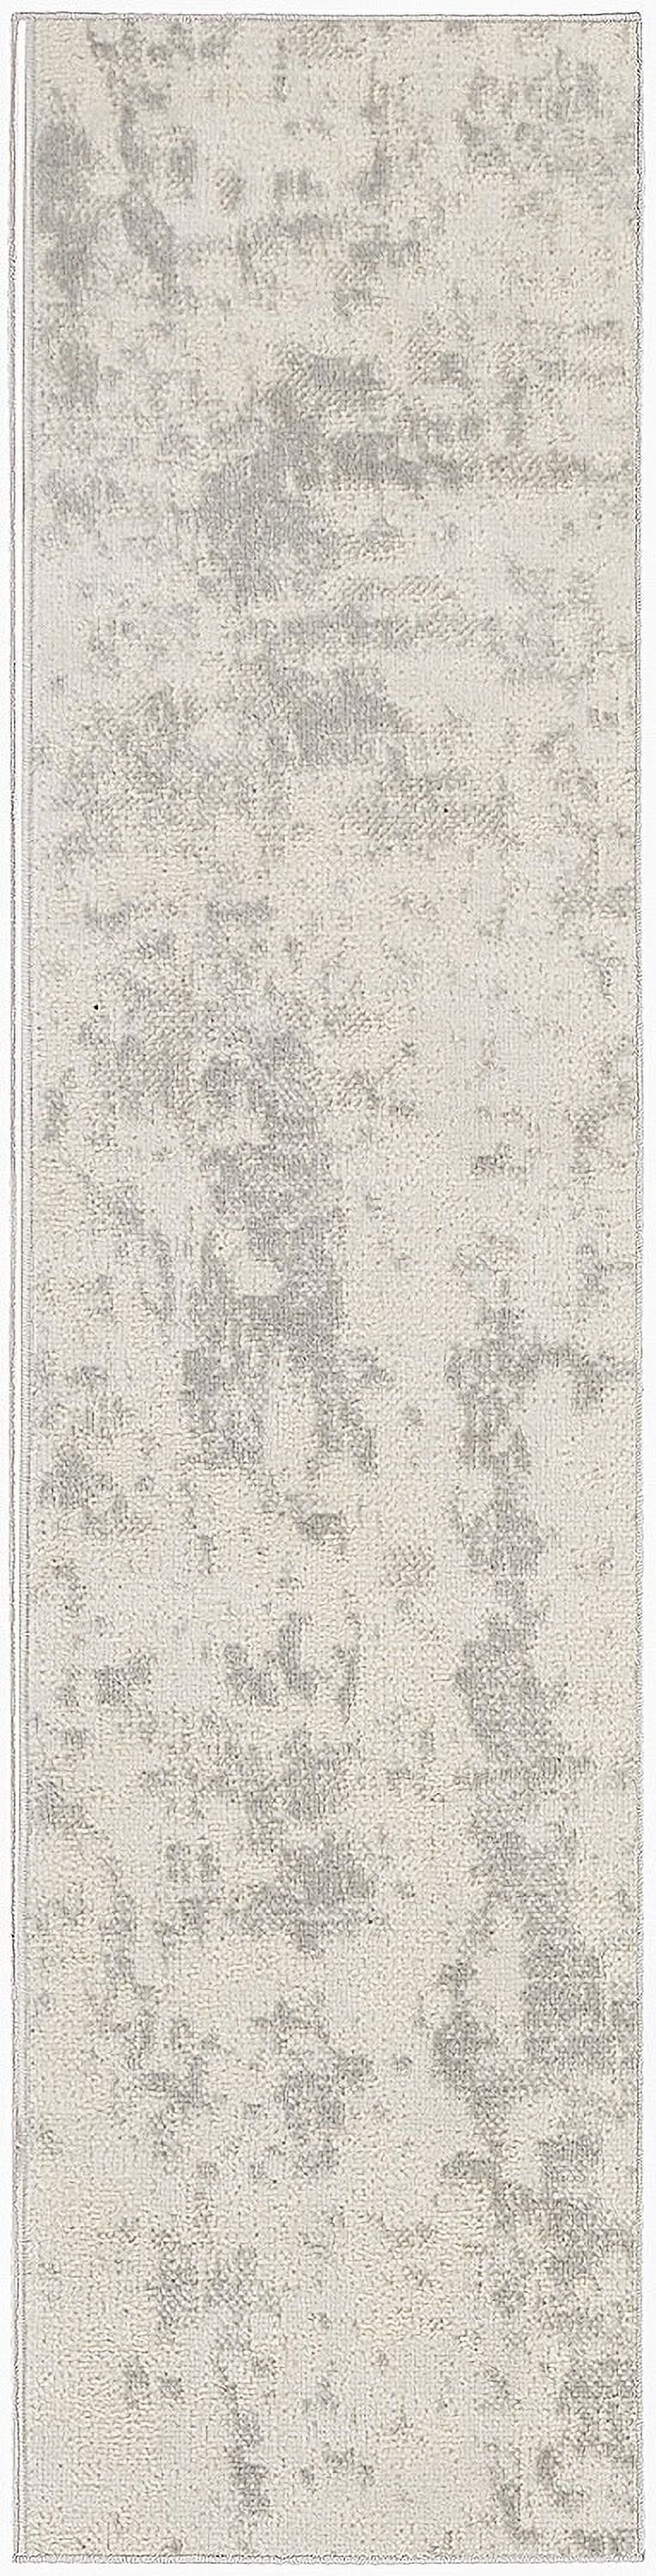 Nourison Concerto Abstract Cream Grey 2'2" x 7'6" Area Rug, (2x8) - image 1 of 6